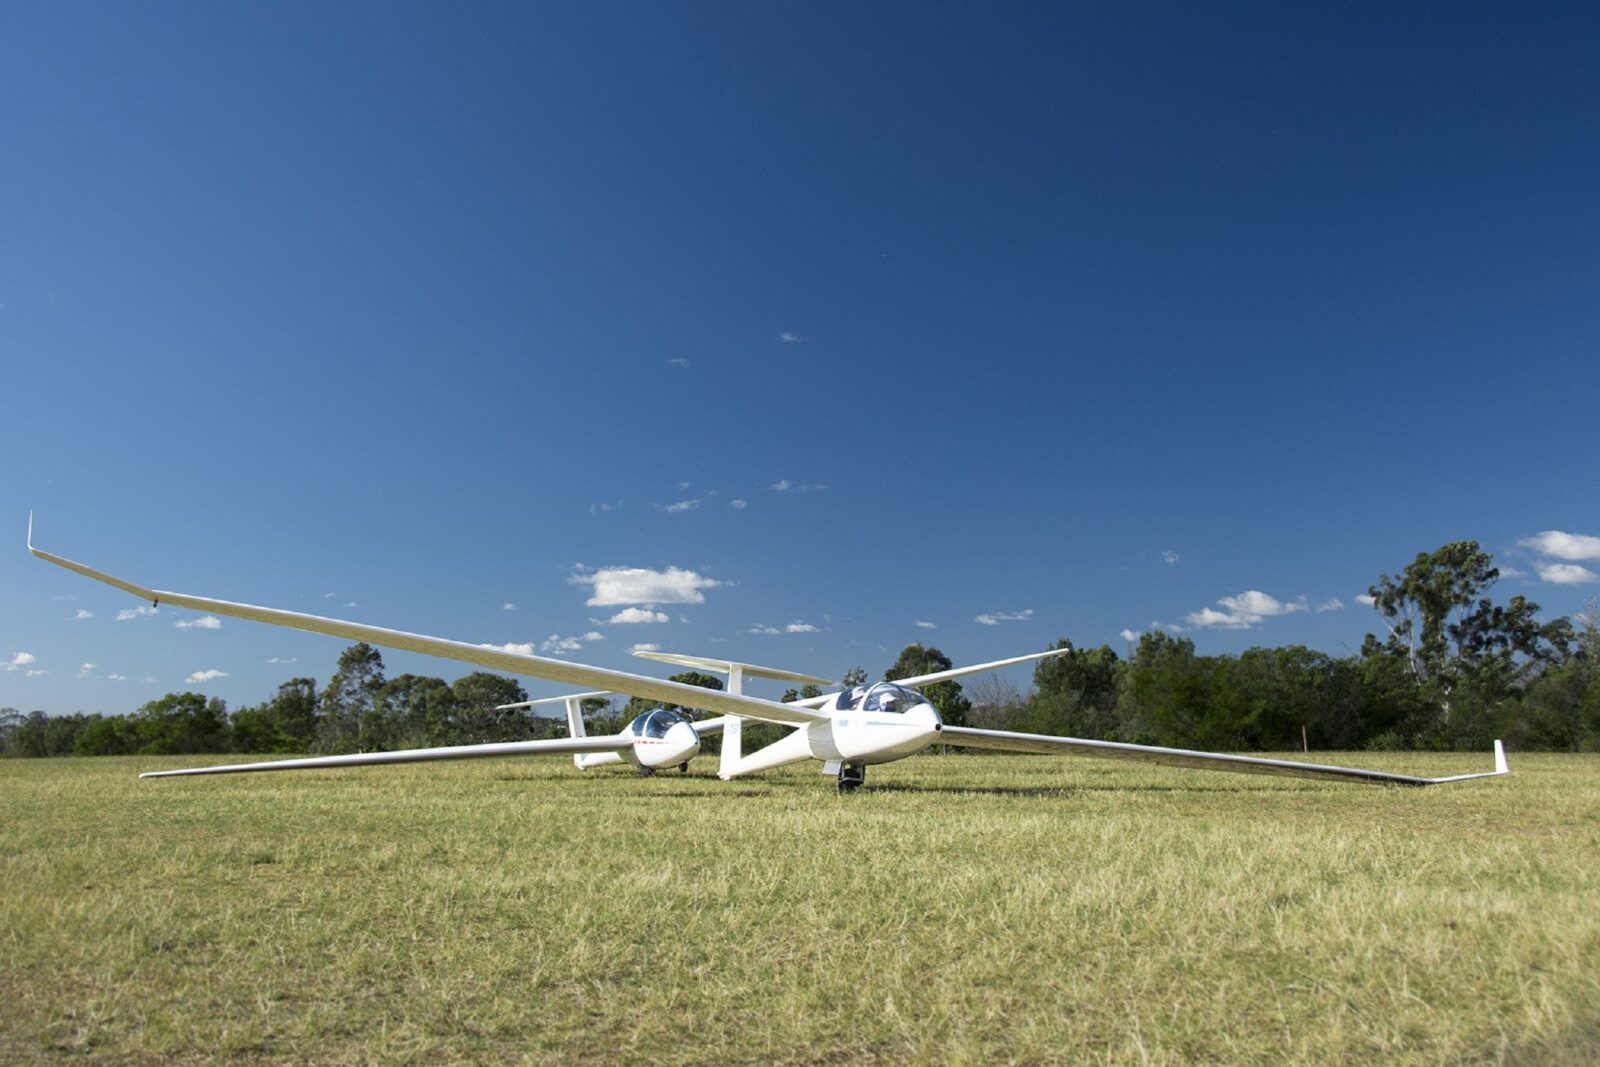 Southern Cross Gliding Club